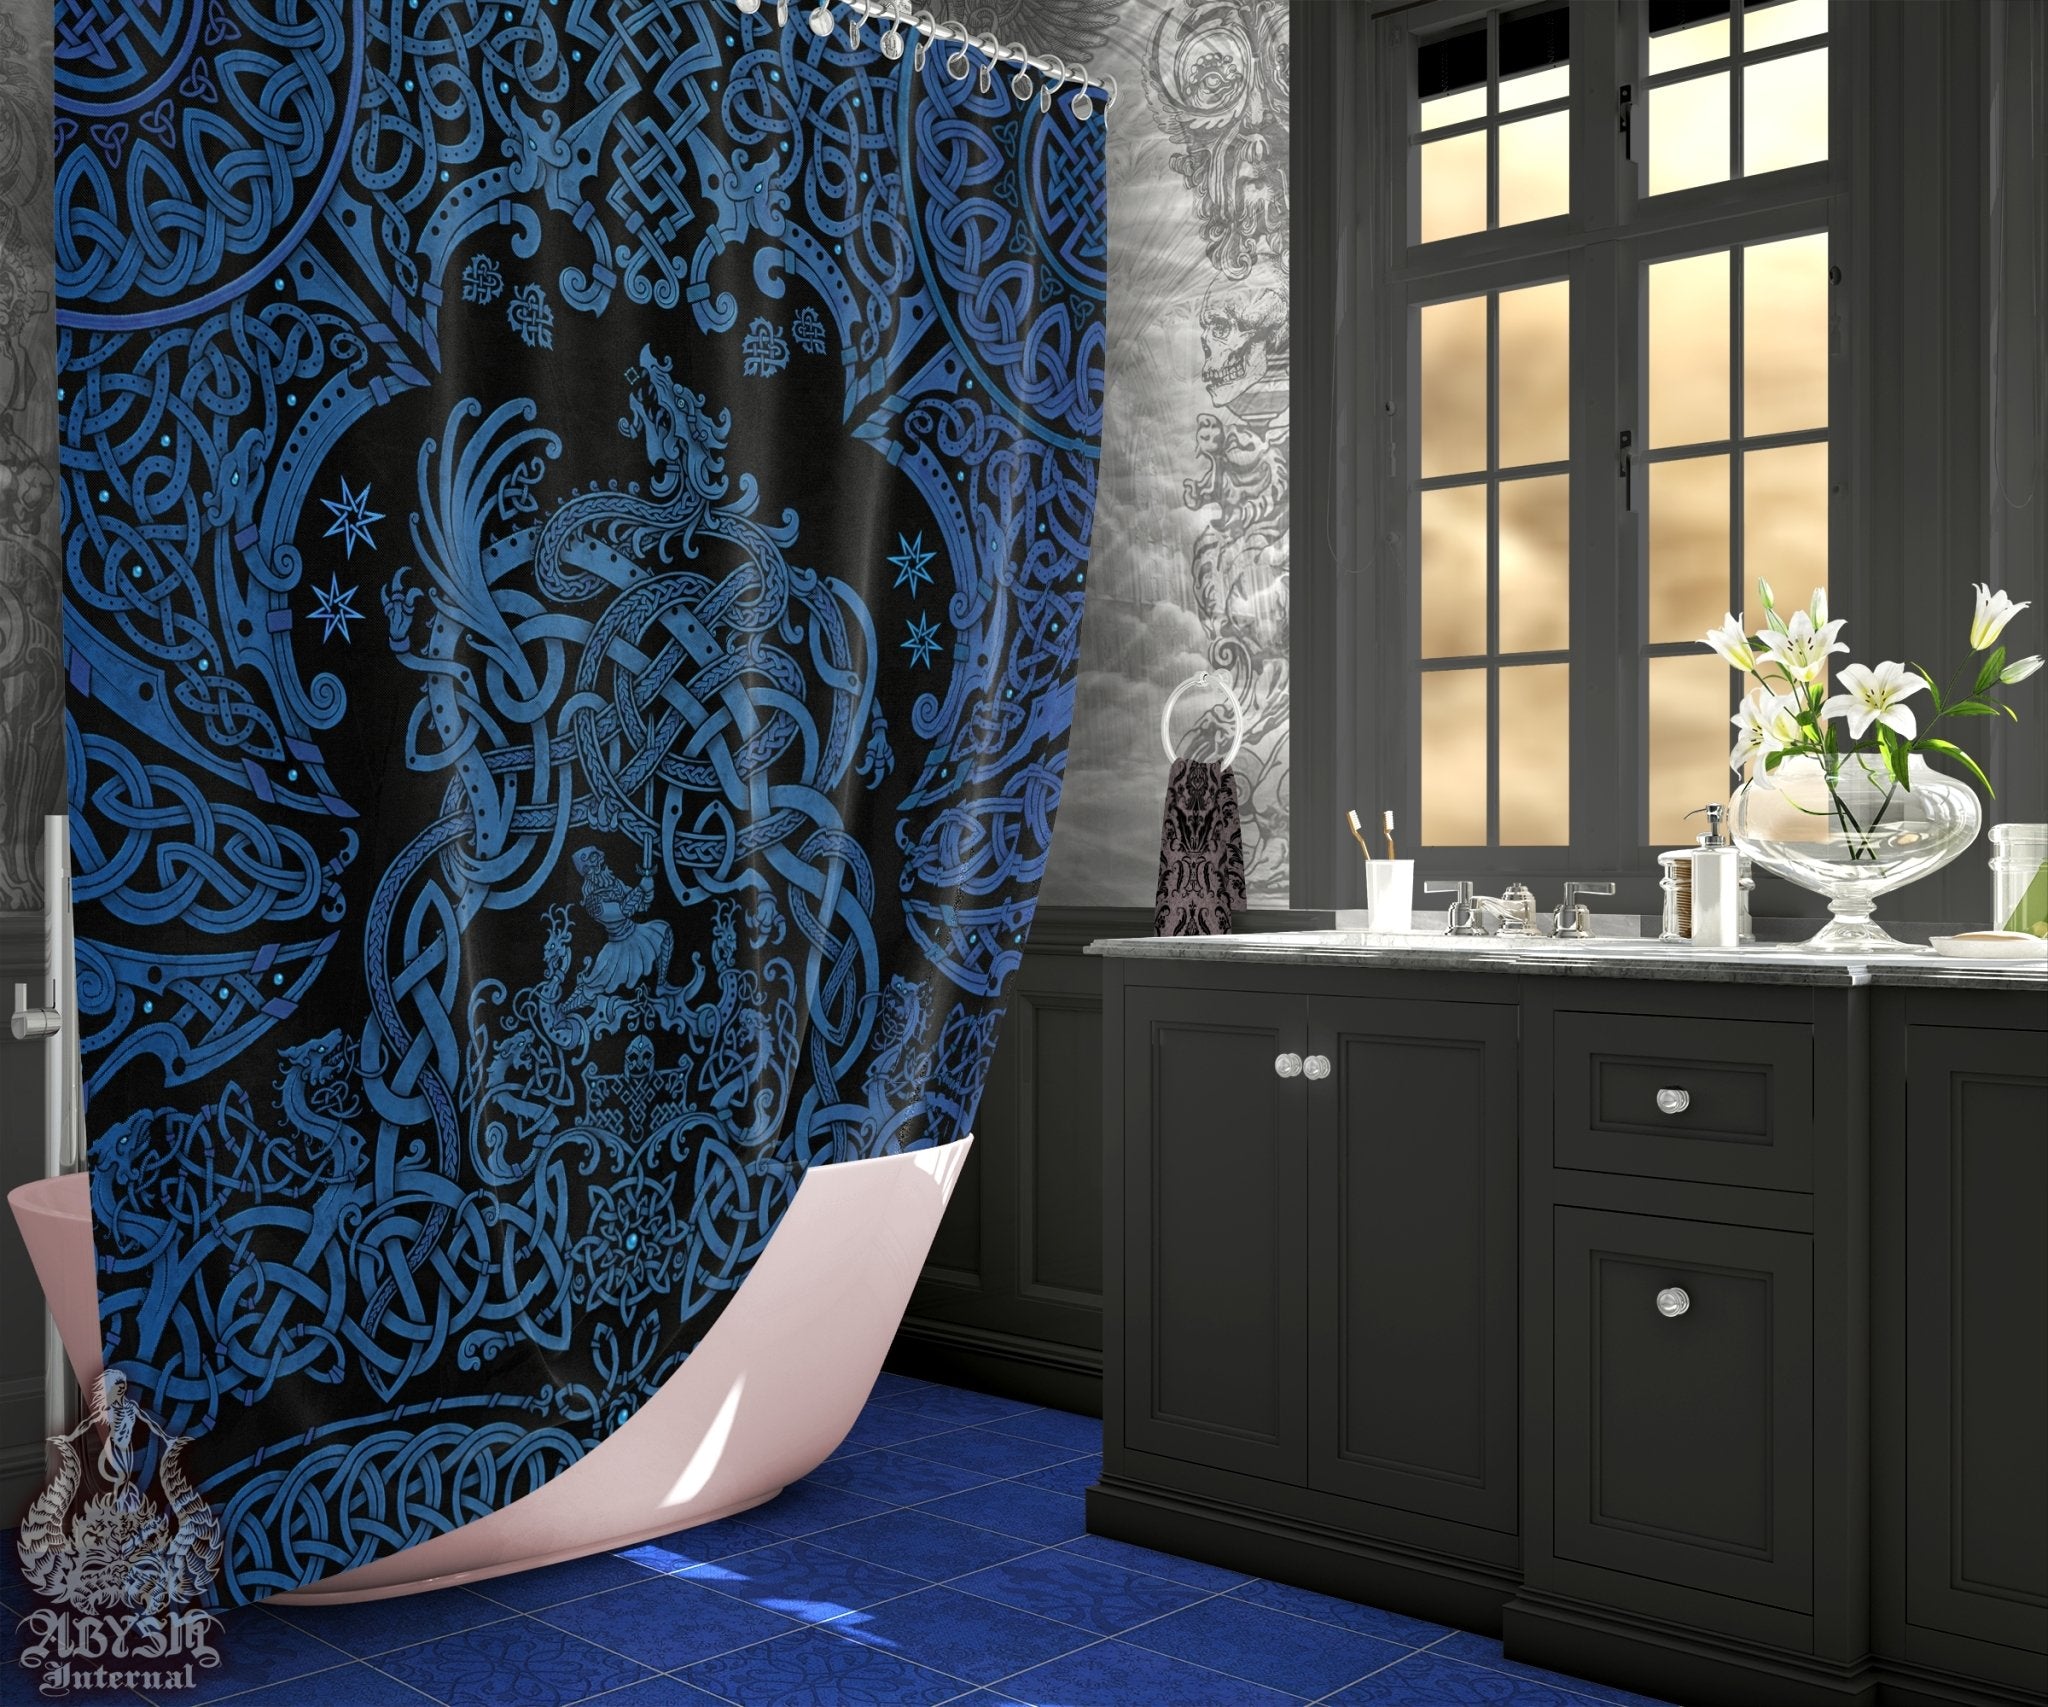 Viking Shower Curtain, Bathroom Decor, Nordic & Norse Art, Dragon Fafnir - Black and Blue - Abysm Internal